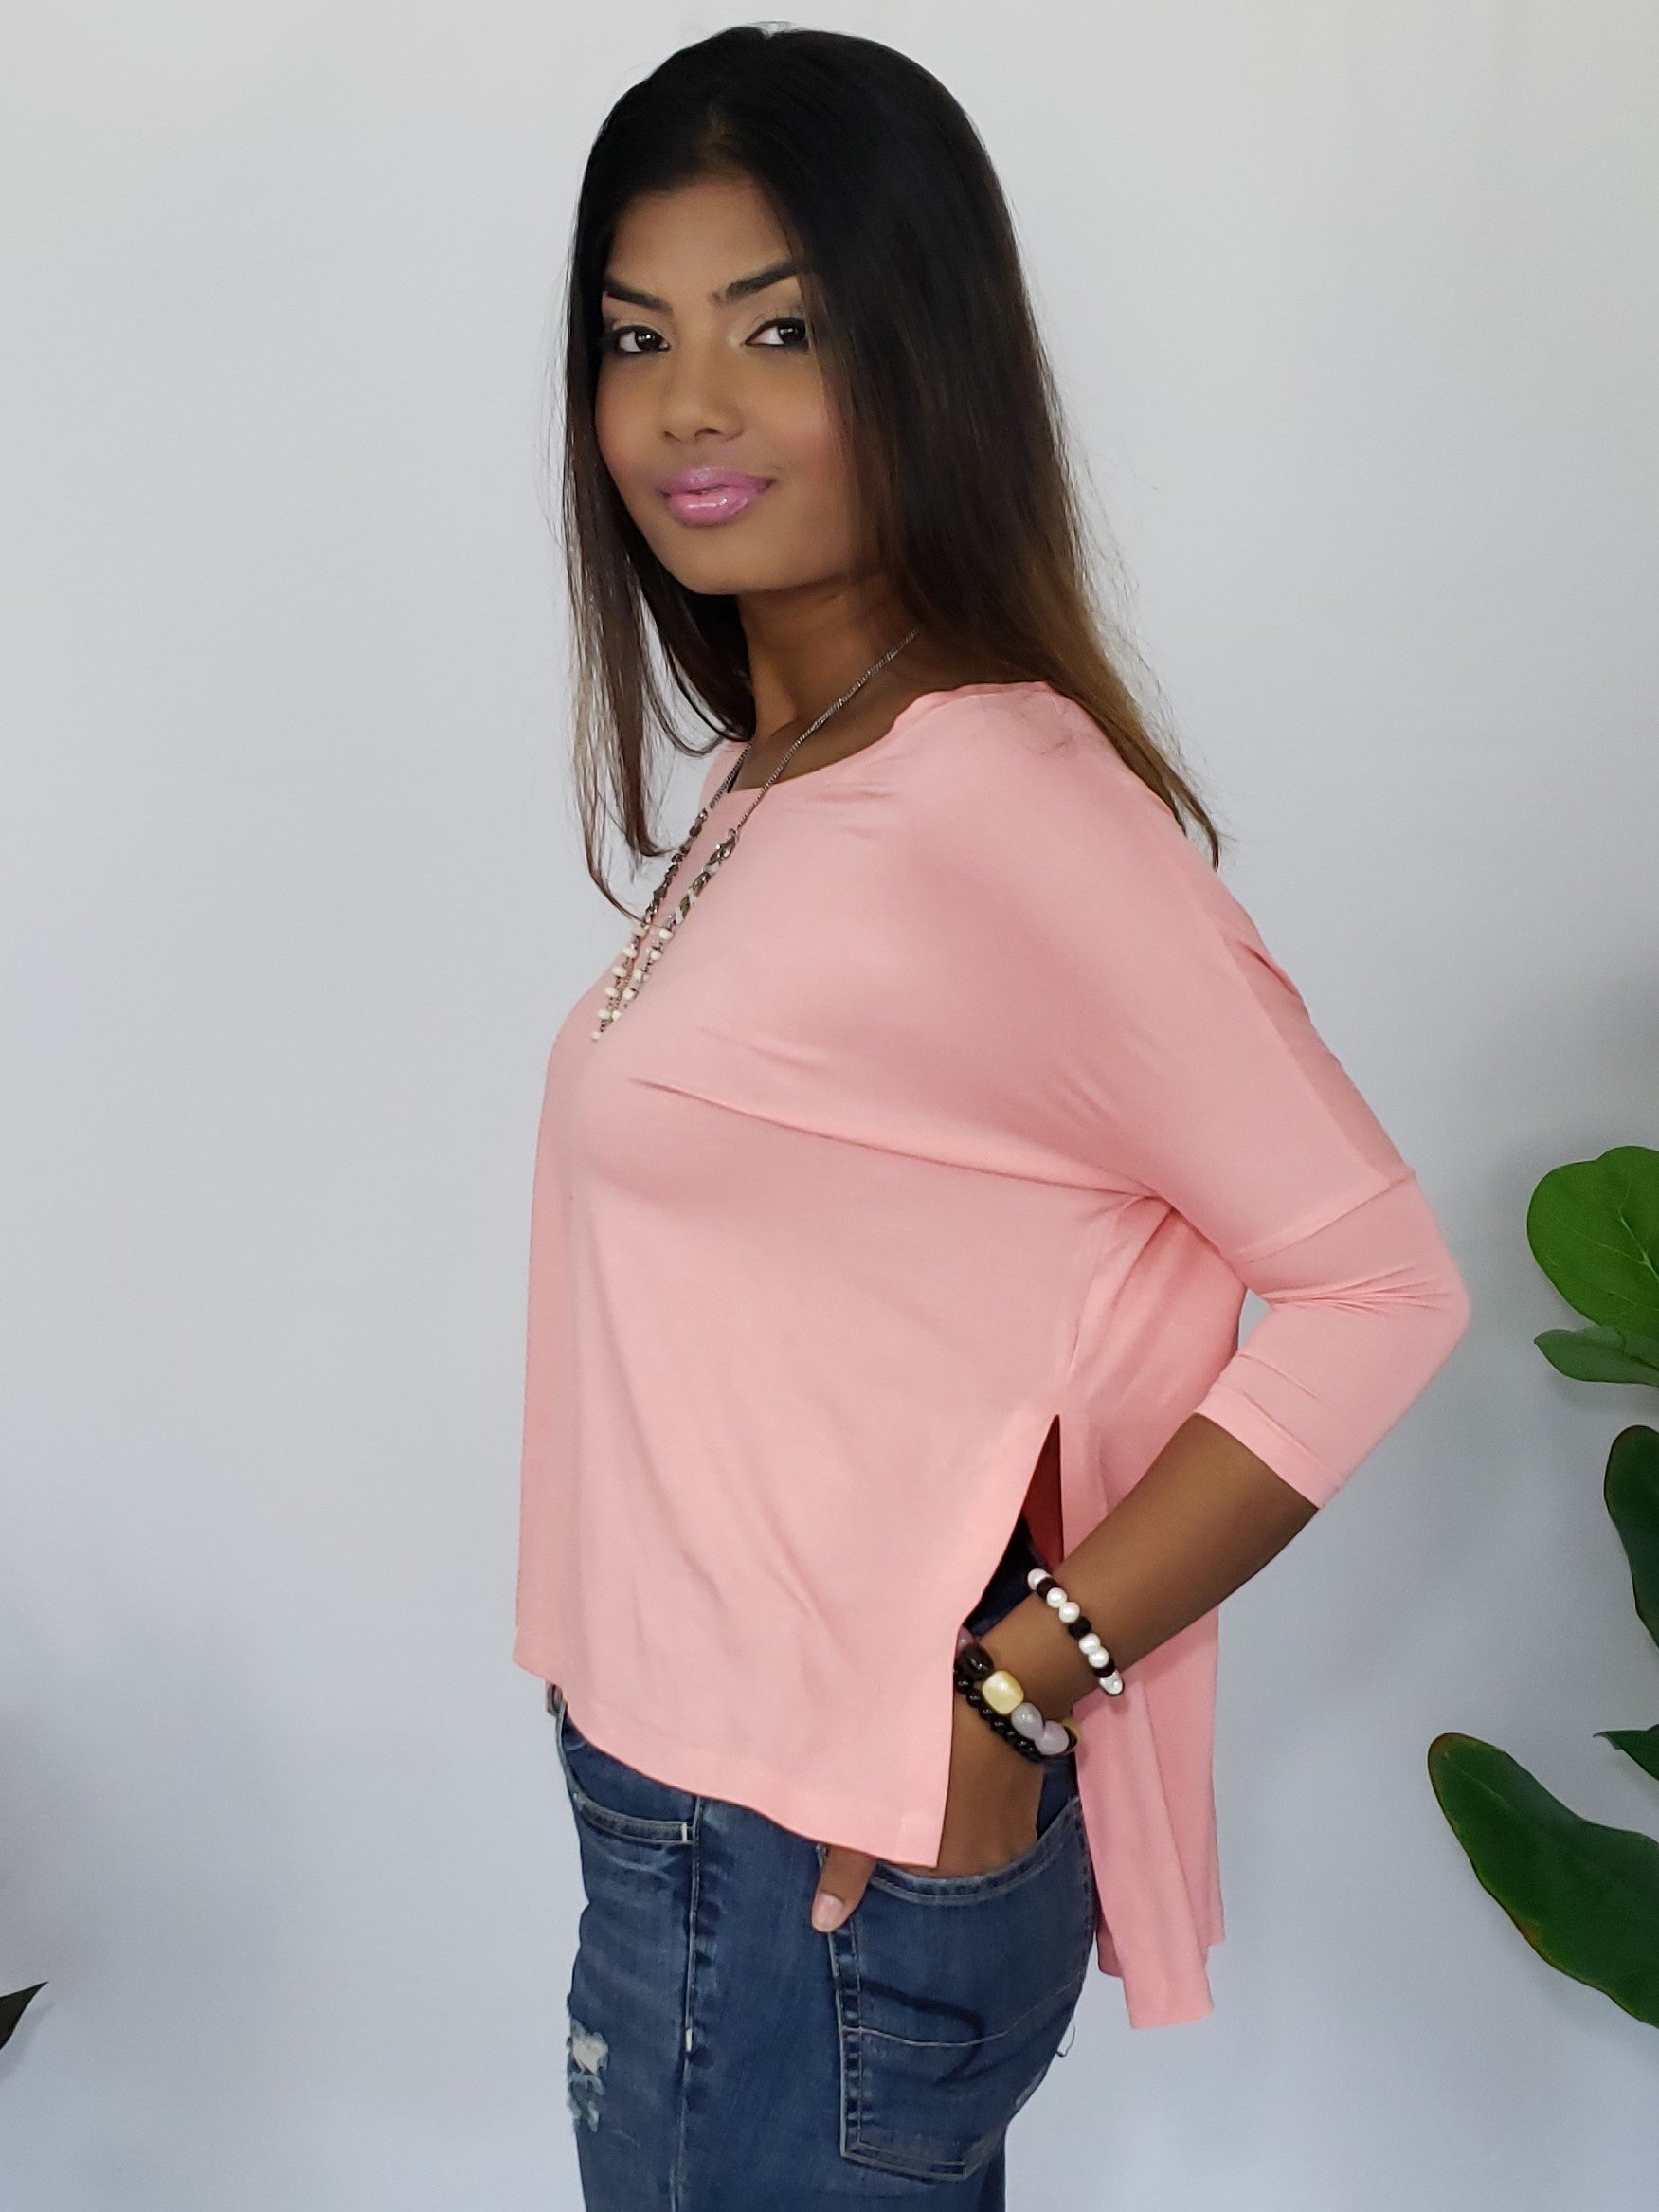 Monica She Candoit Sweet & Comfy T-Shirt in Bright Peach - Houzz of DVA Boutique